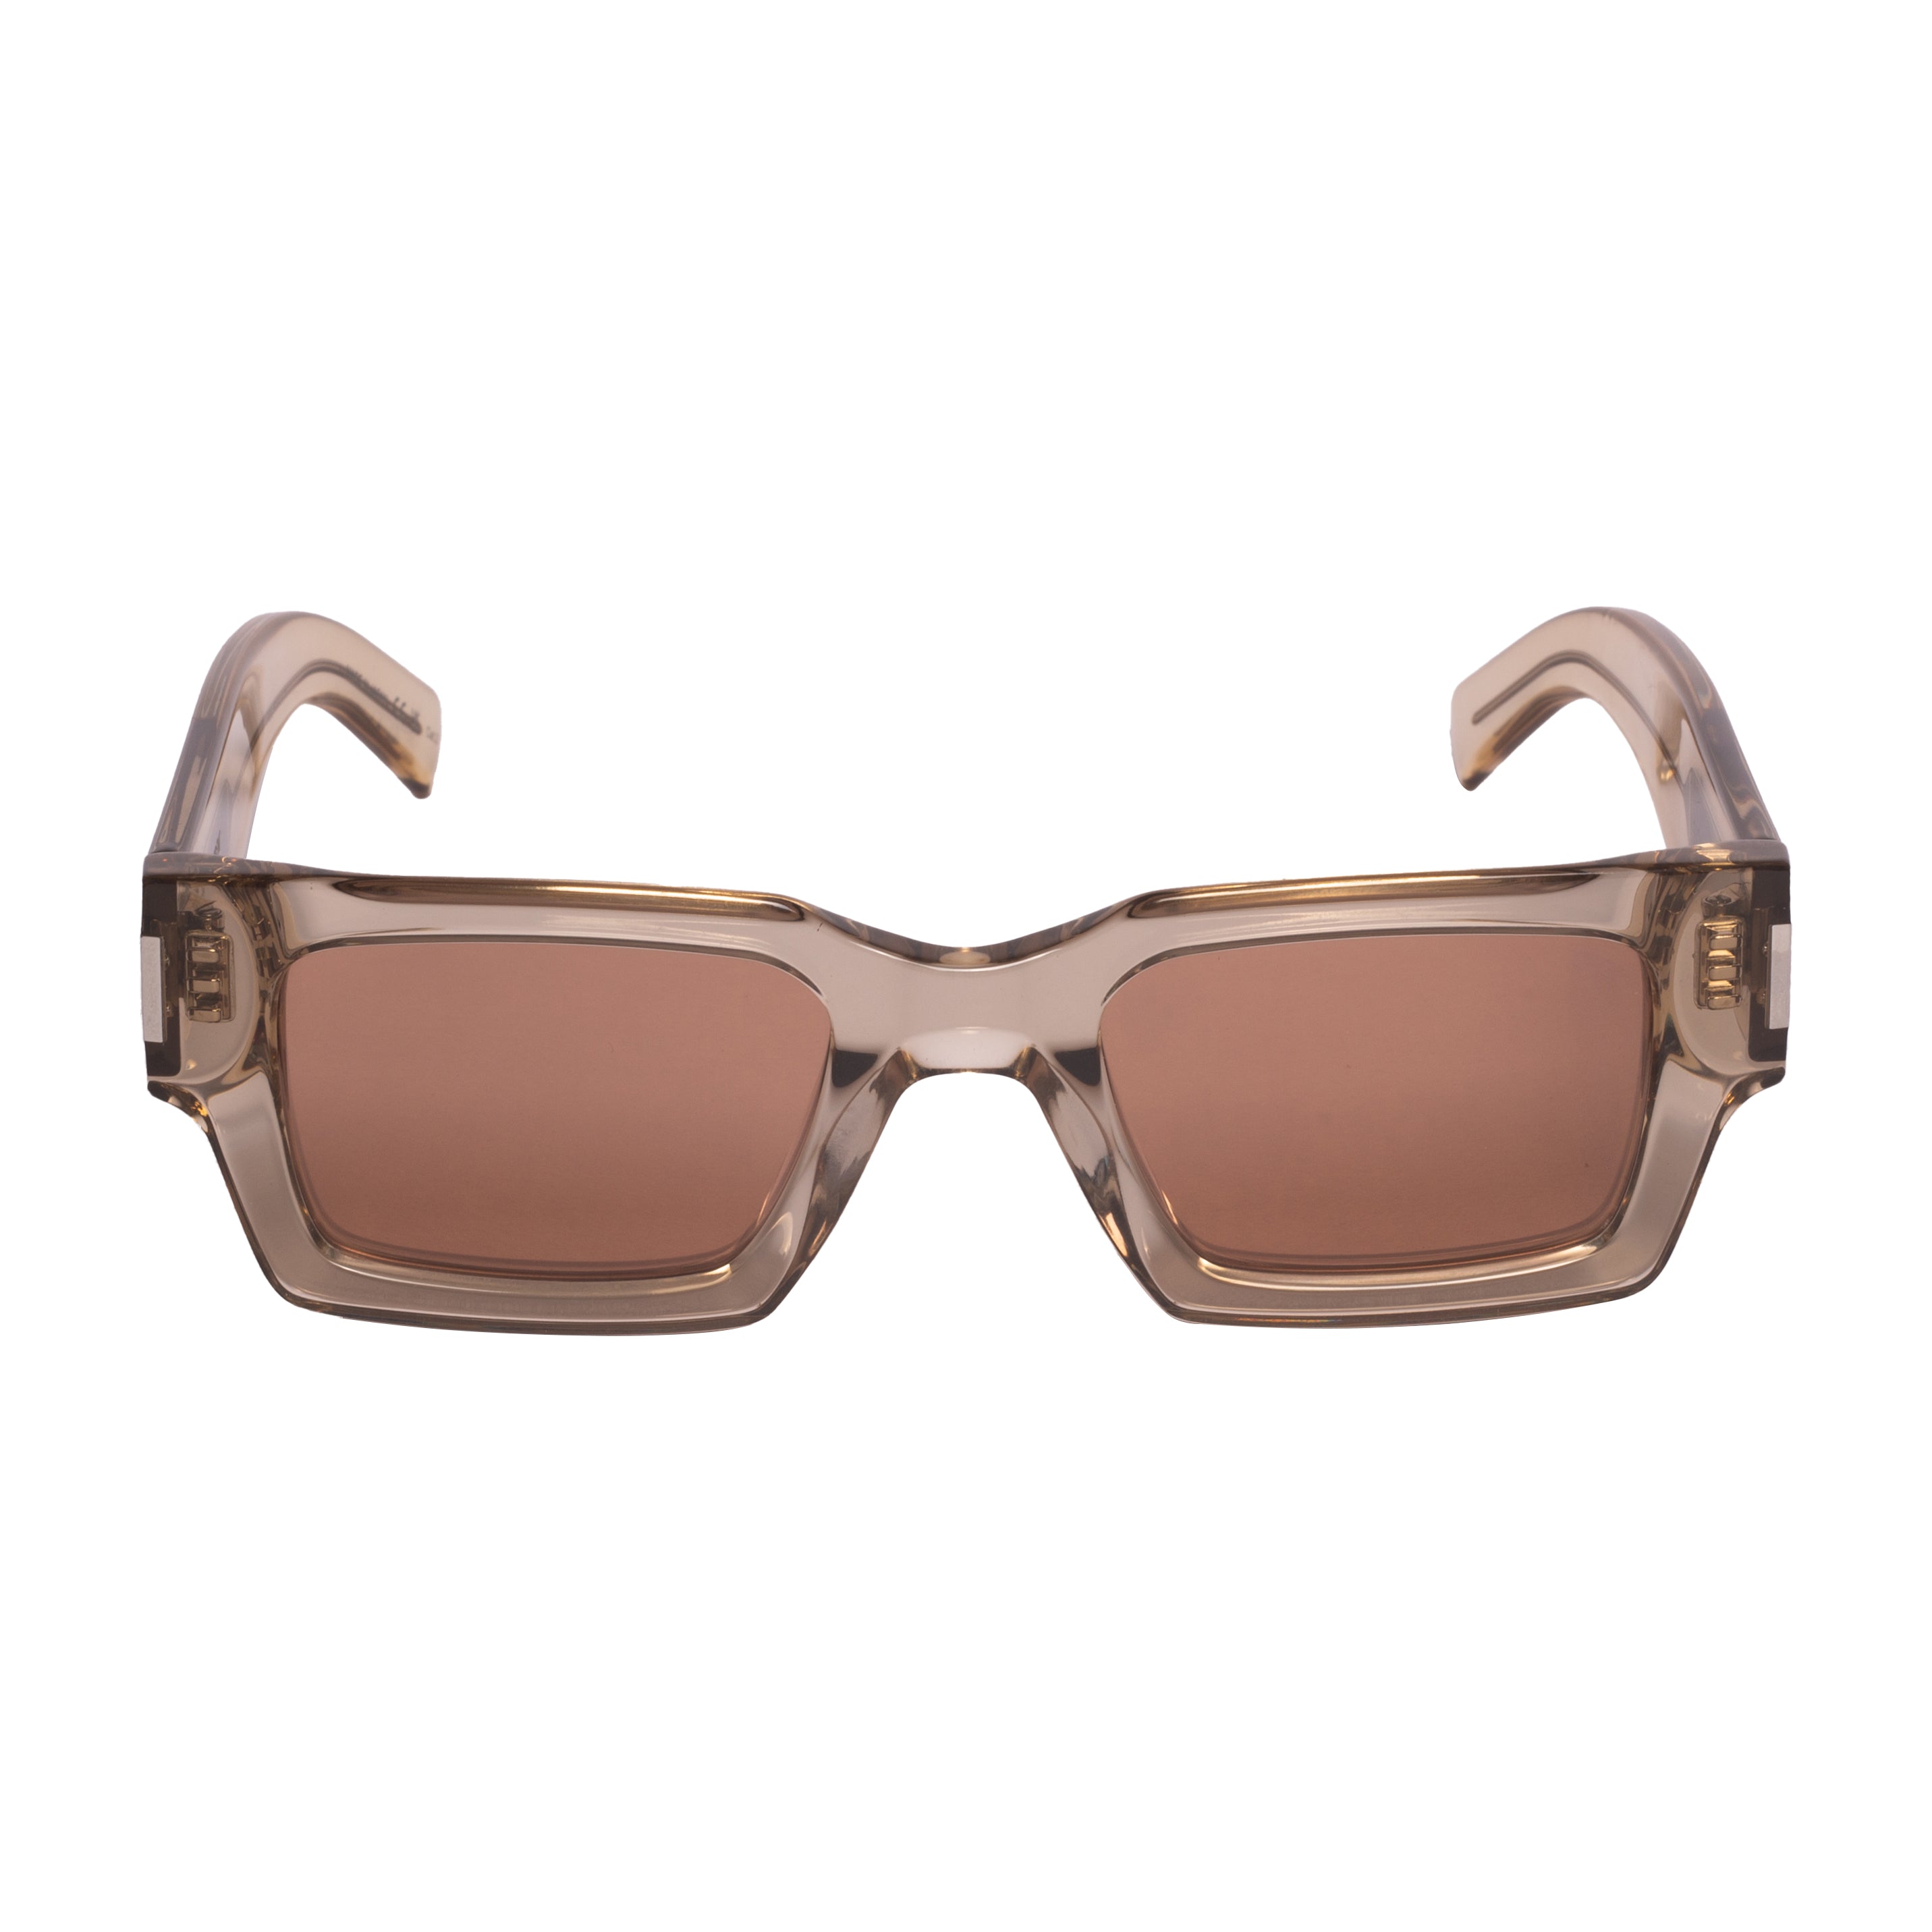 Saint Laurent-SL 572-50-006 Sunglasses - Premium Sunglasses from Saint Laurent - Just Rs. 30220! Shop now at Laxmi Opticians